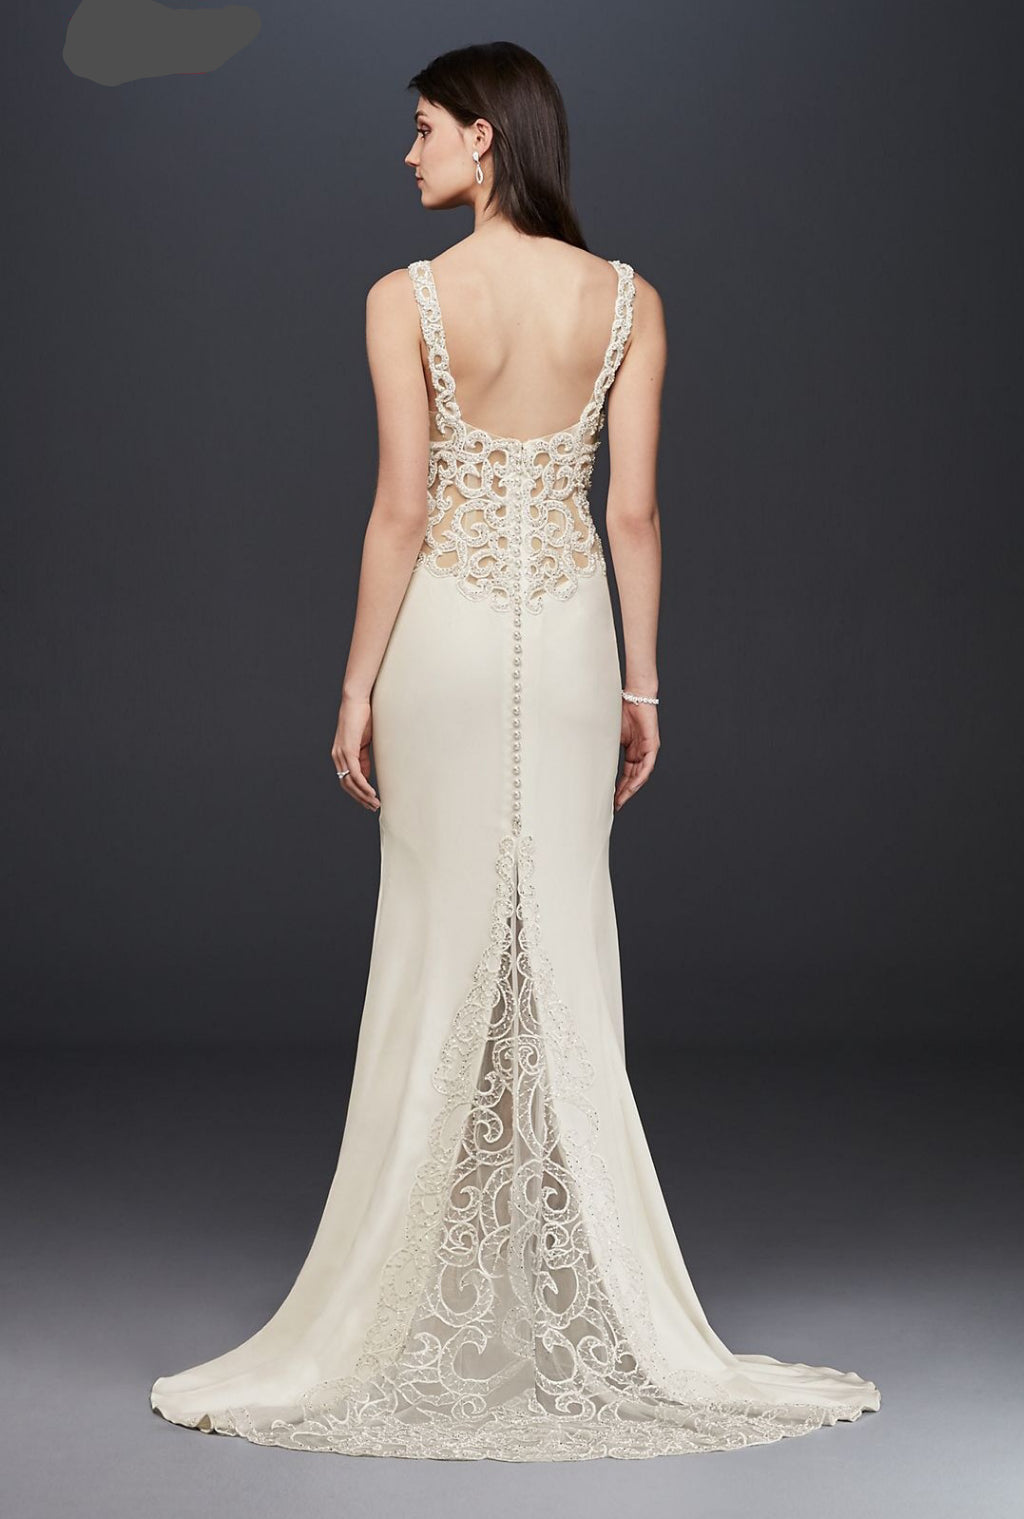 Galina Signature 'Beaded Illusion' size 8 new wedding dress back view on model